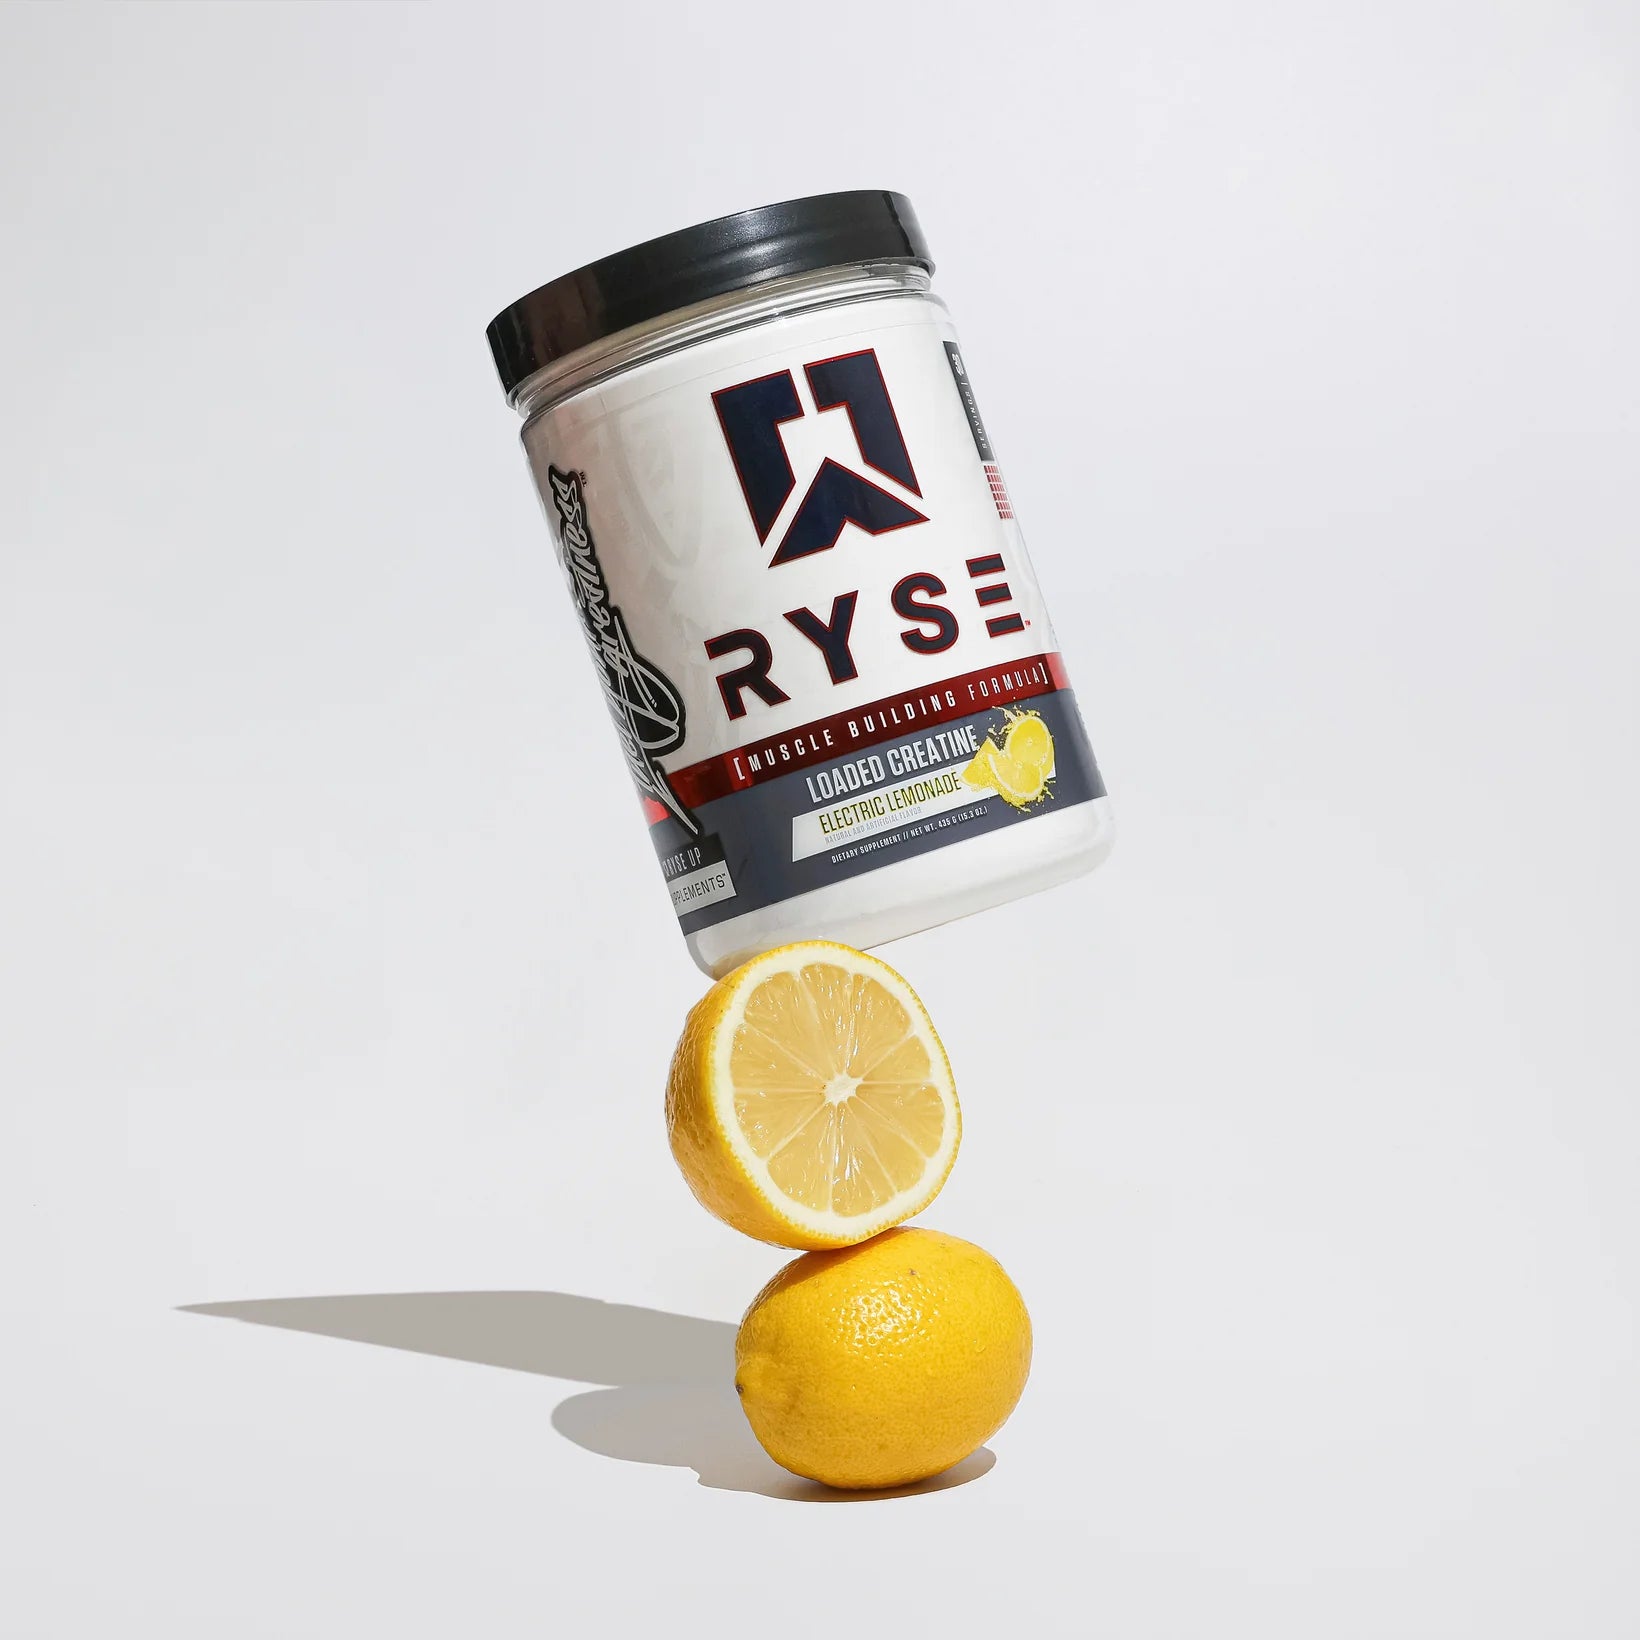 Ryse | Loaded Creatine